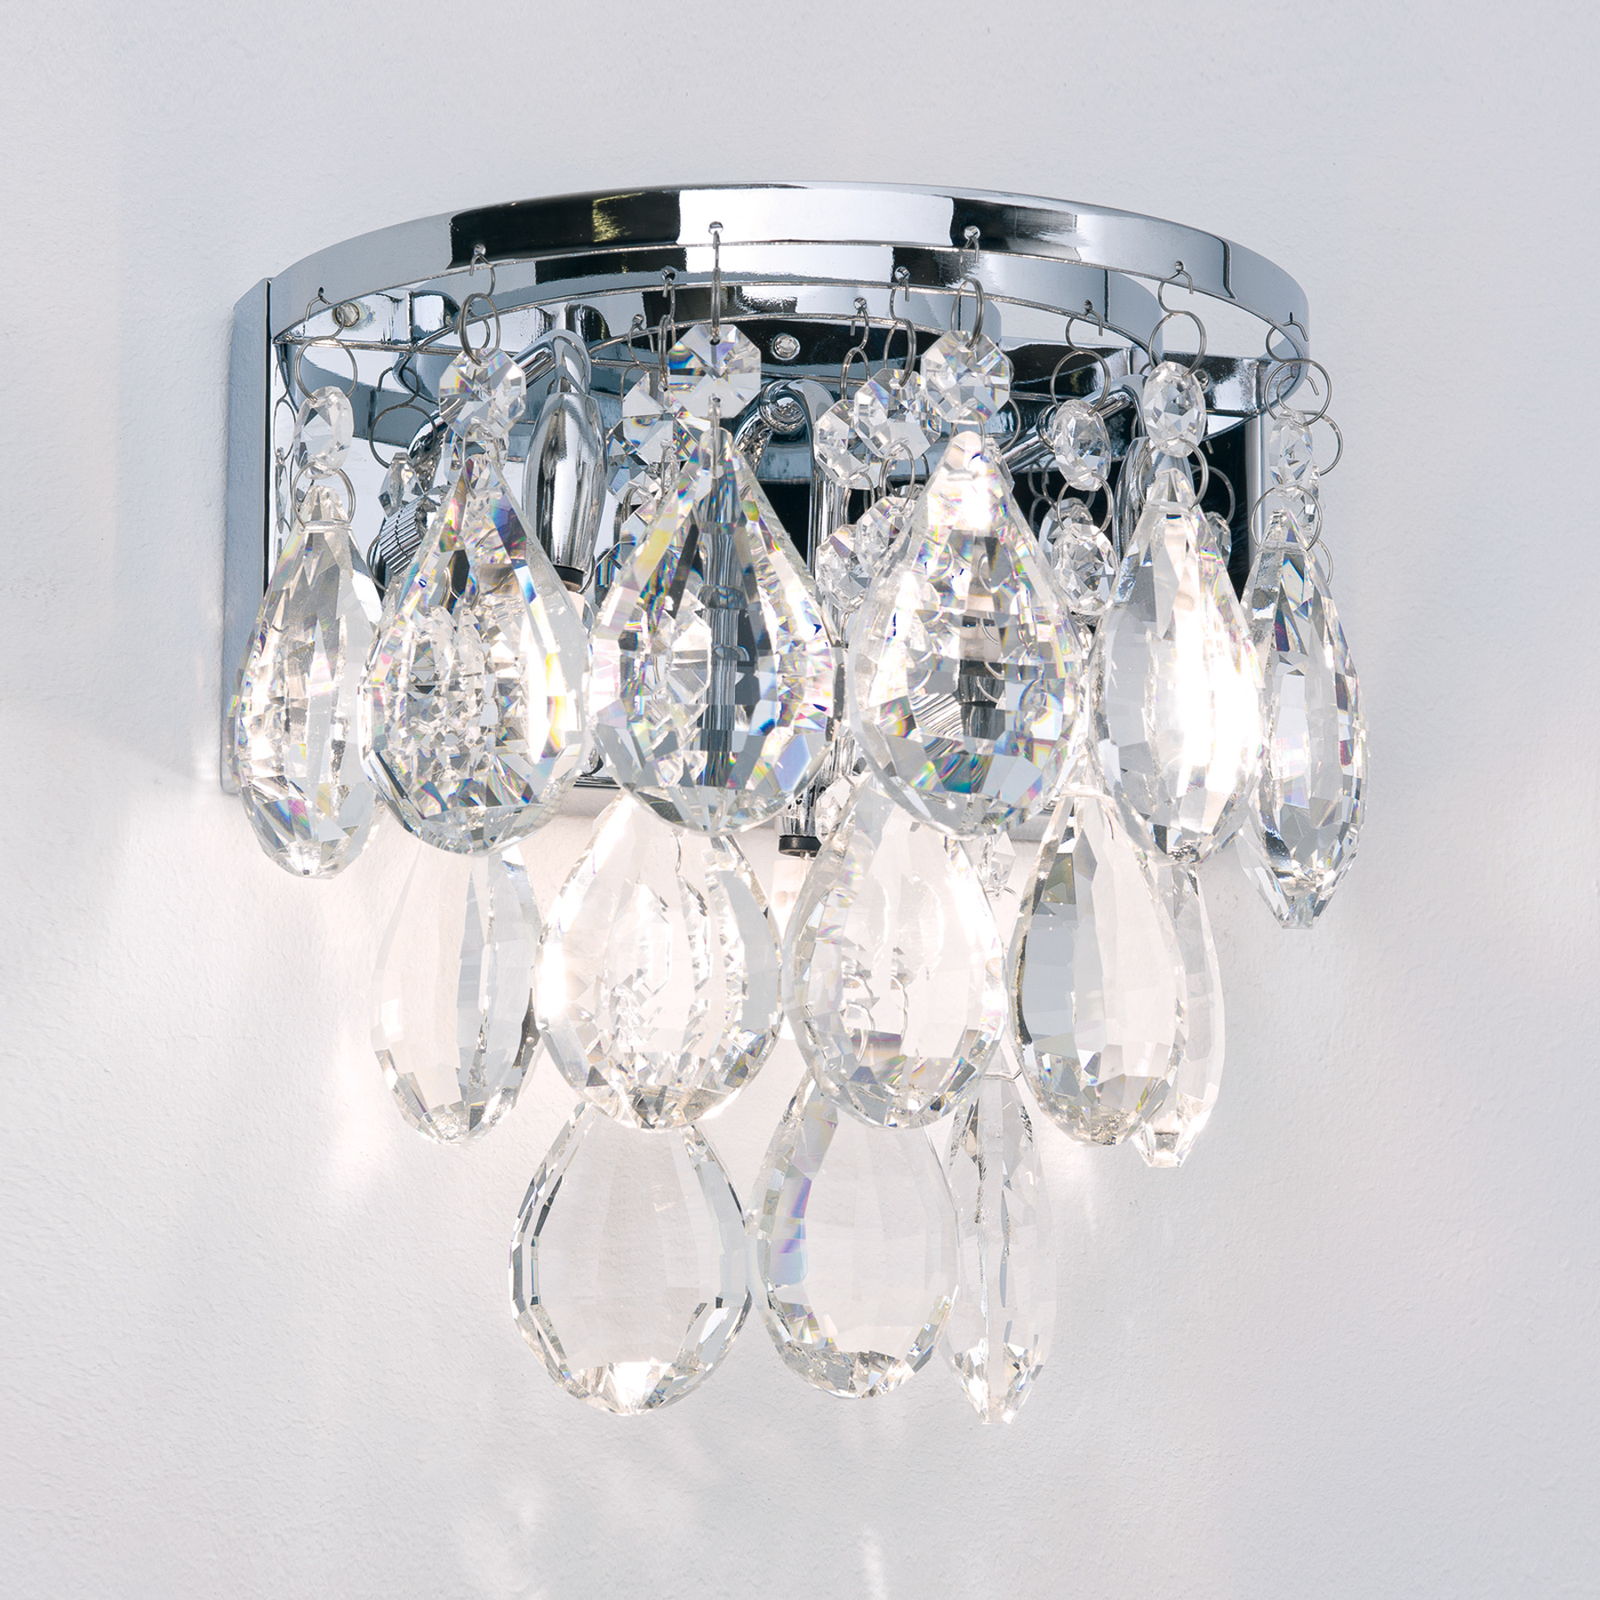 Celeste wall light with K9 crystals, chrome